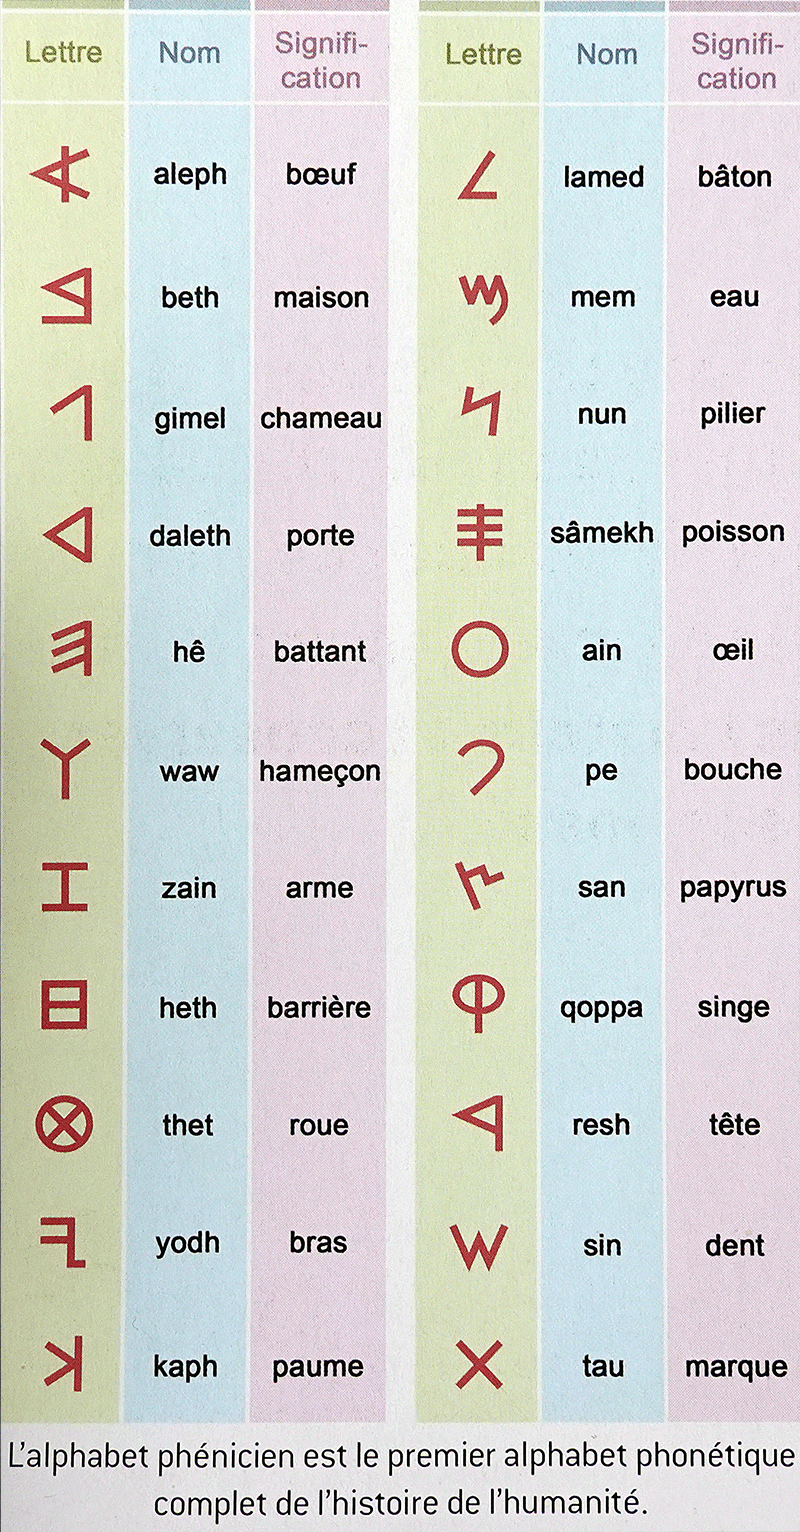 Alphabet de Byblos (alphabet phénicien)